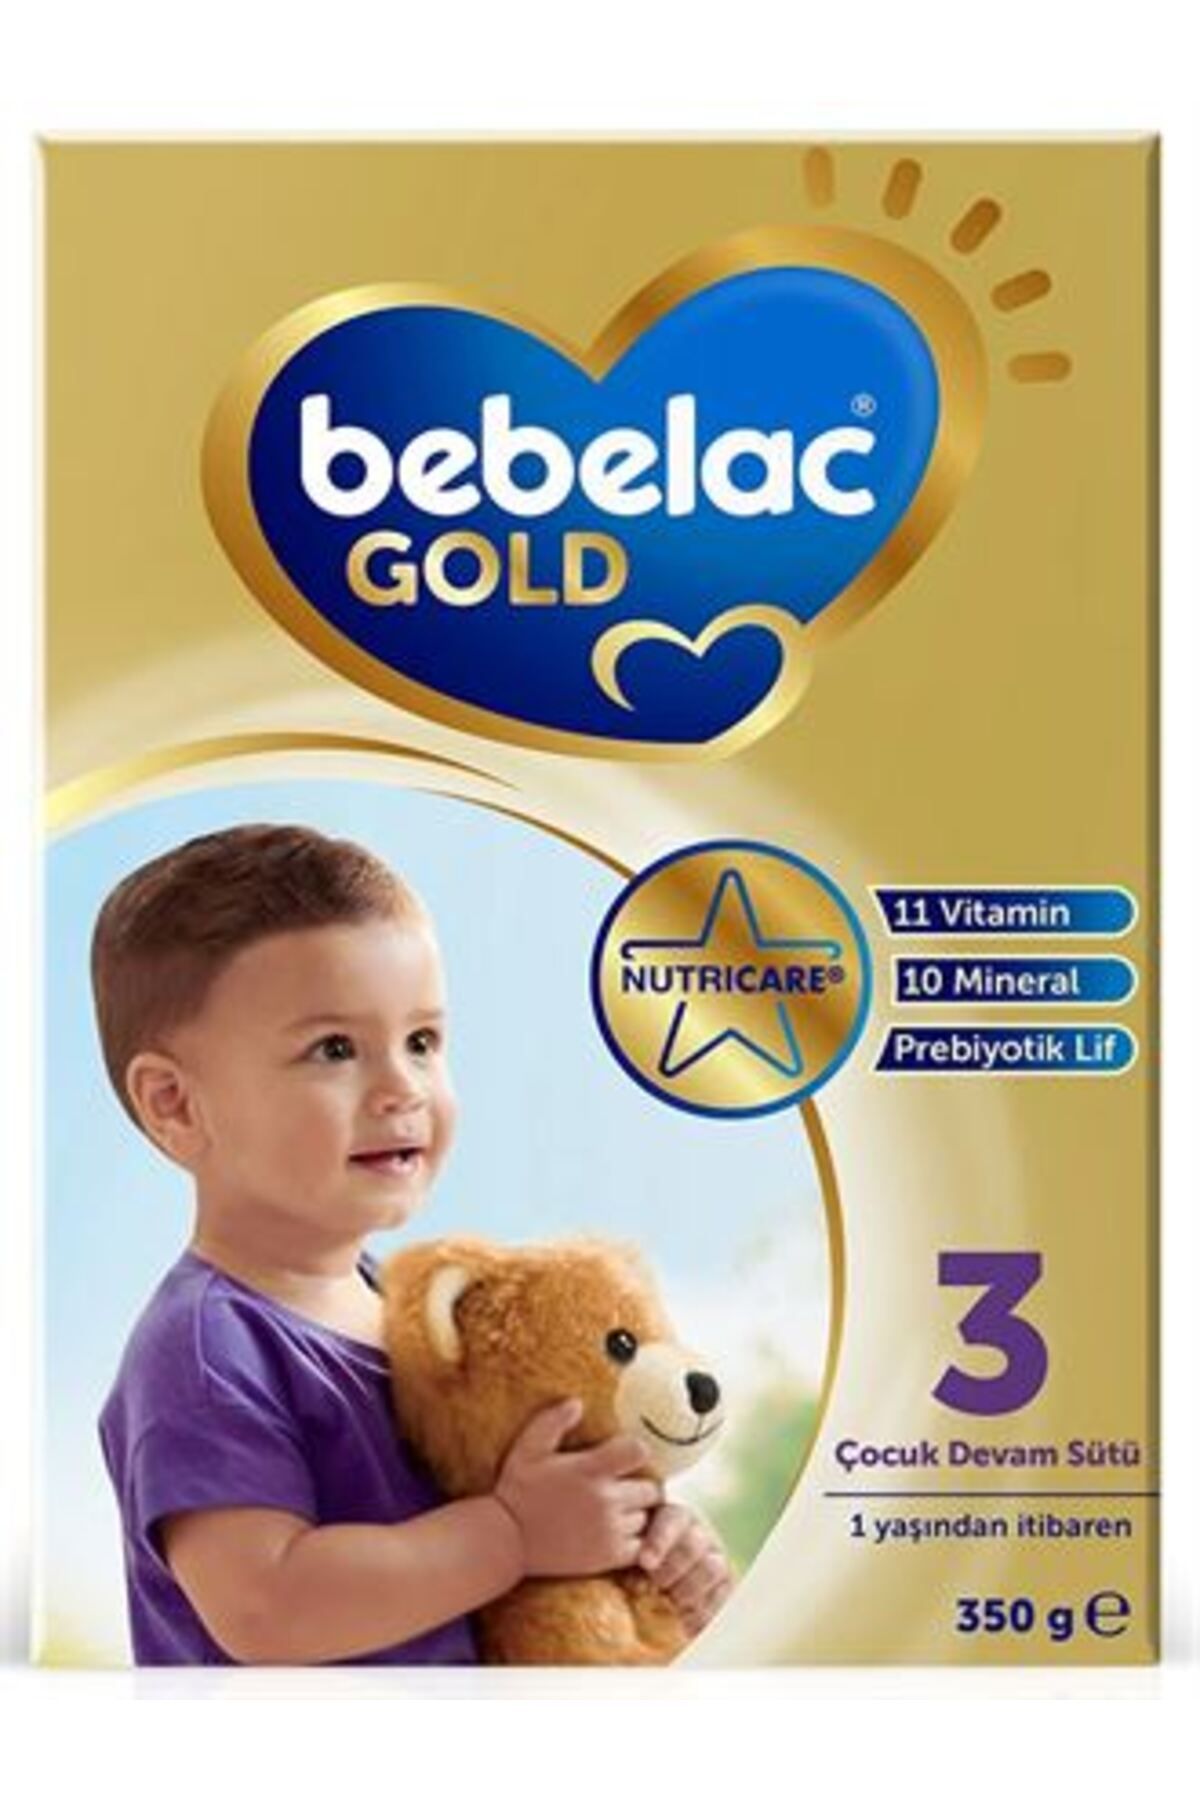 Bebelac ( 1 ADET ) Bebelac Gold 3 Vitamin Prebiyotik 350 Gr